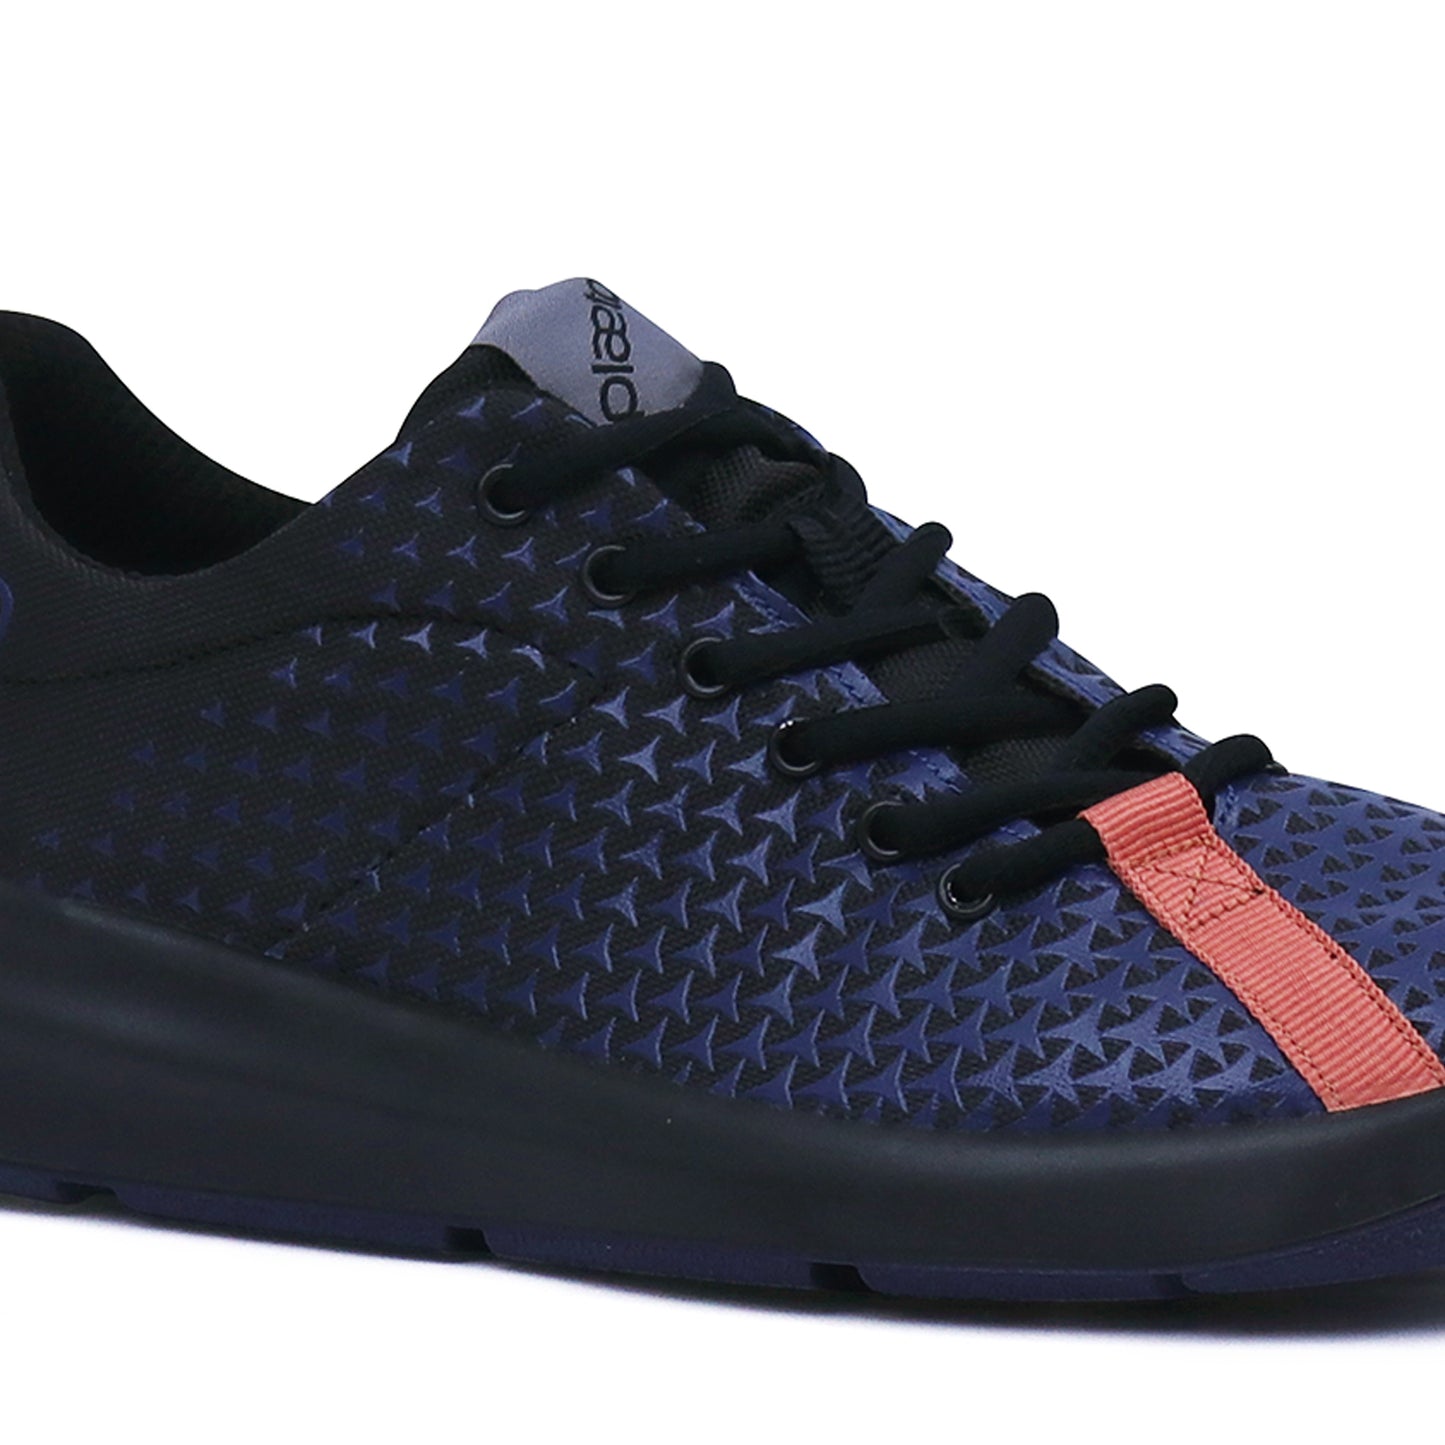 Starblast Women's Sports Shoes - Black / Navy Blue